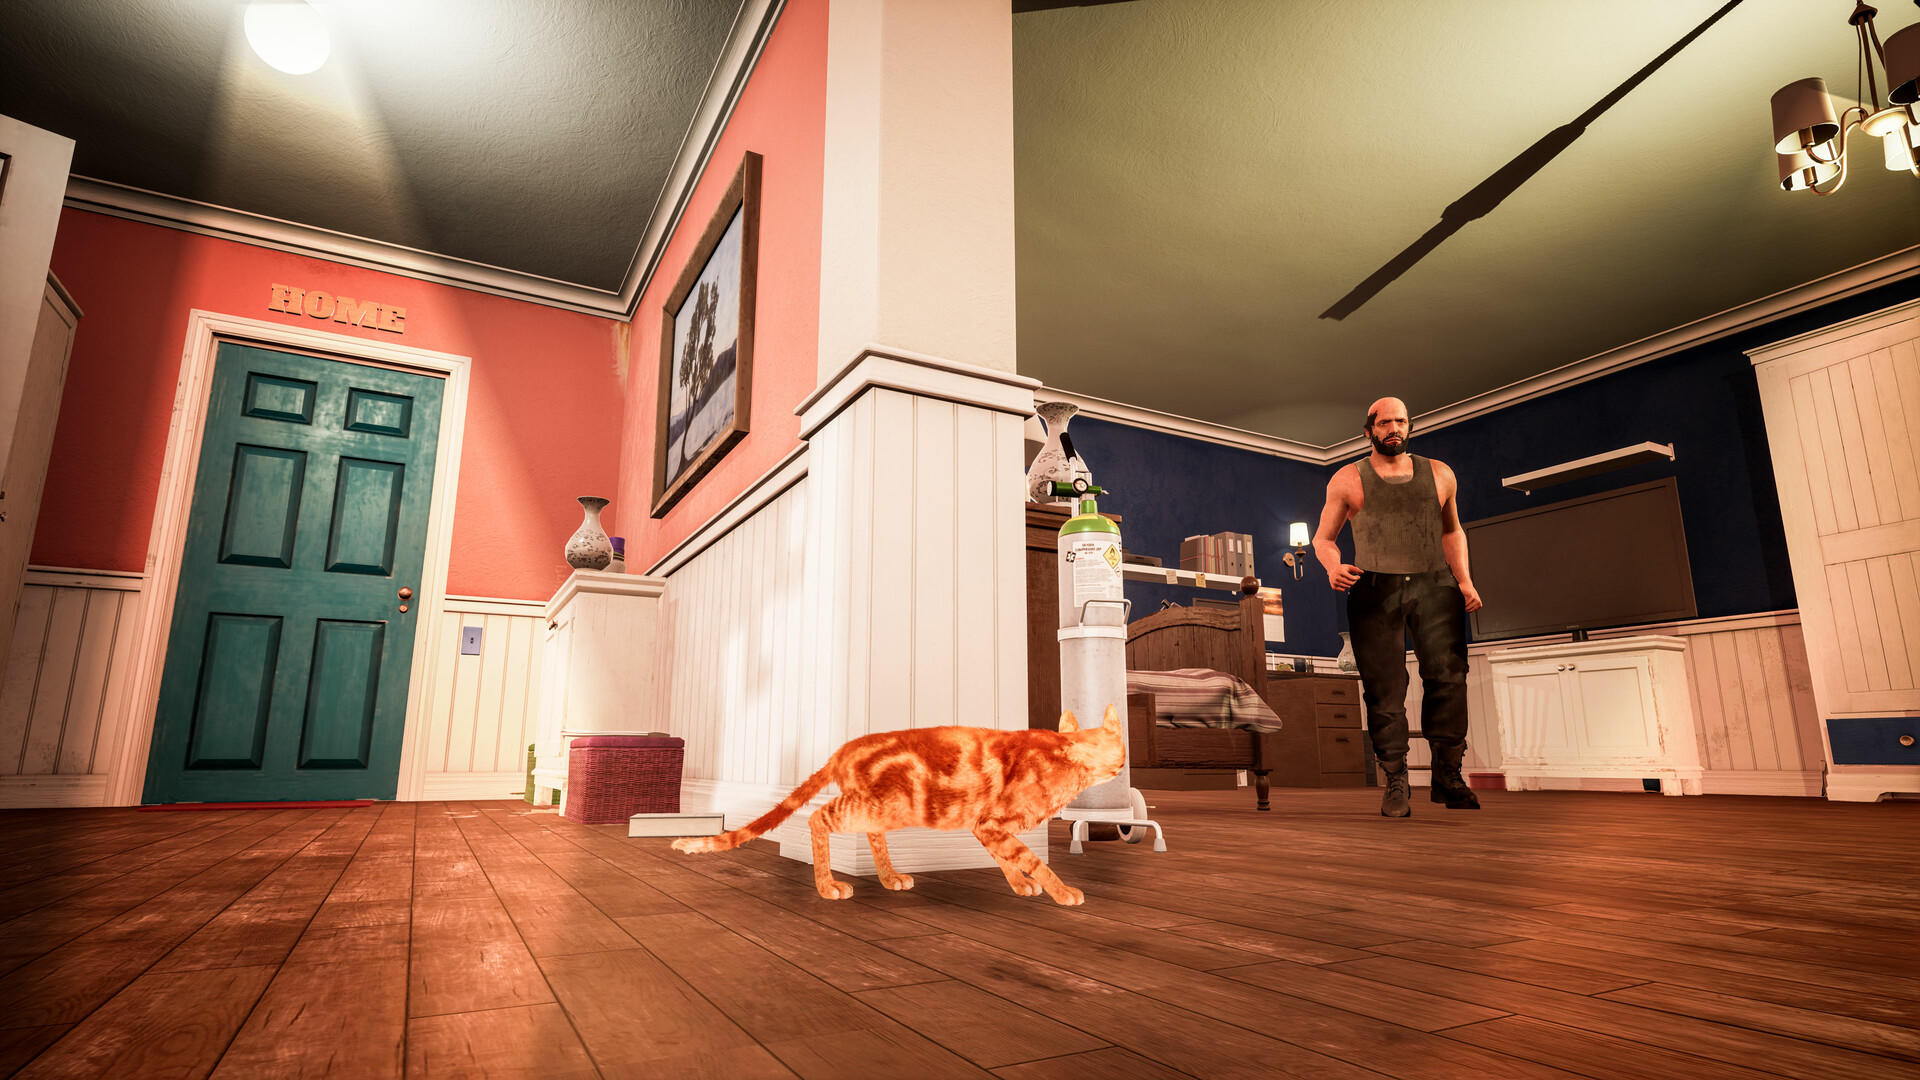 Screenshot of Cat Simulator - Kitty Conundrums